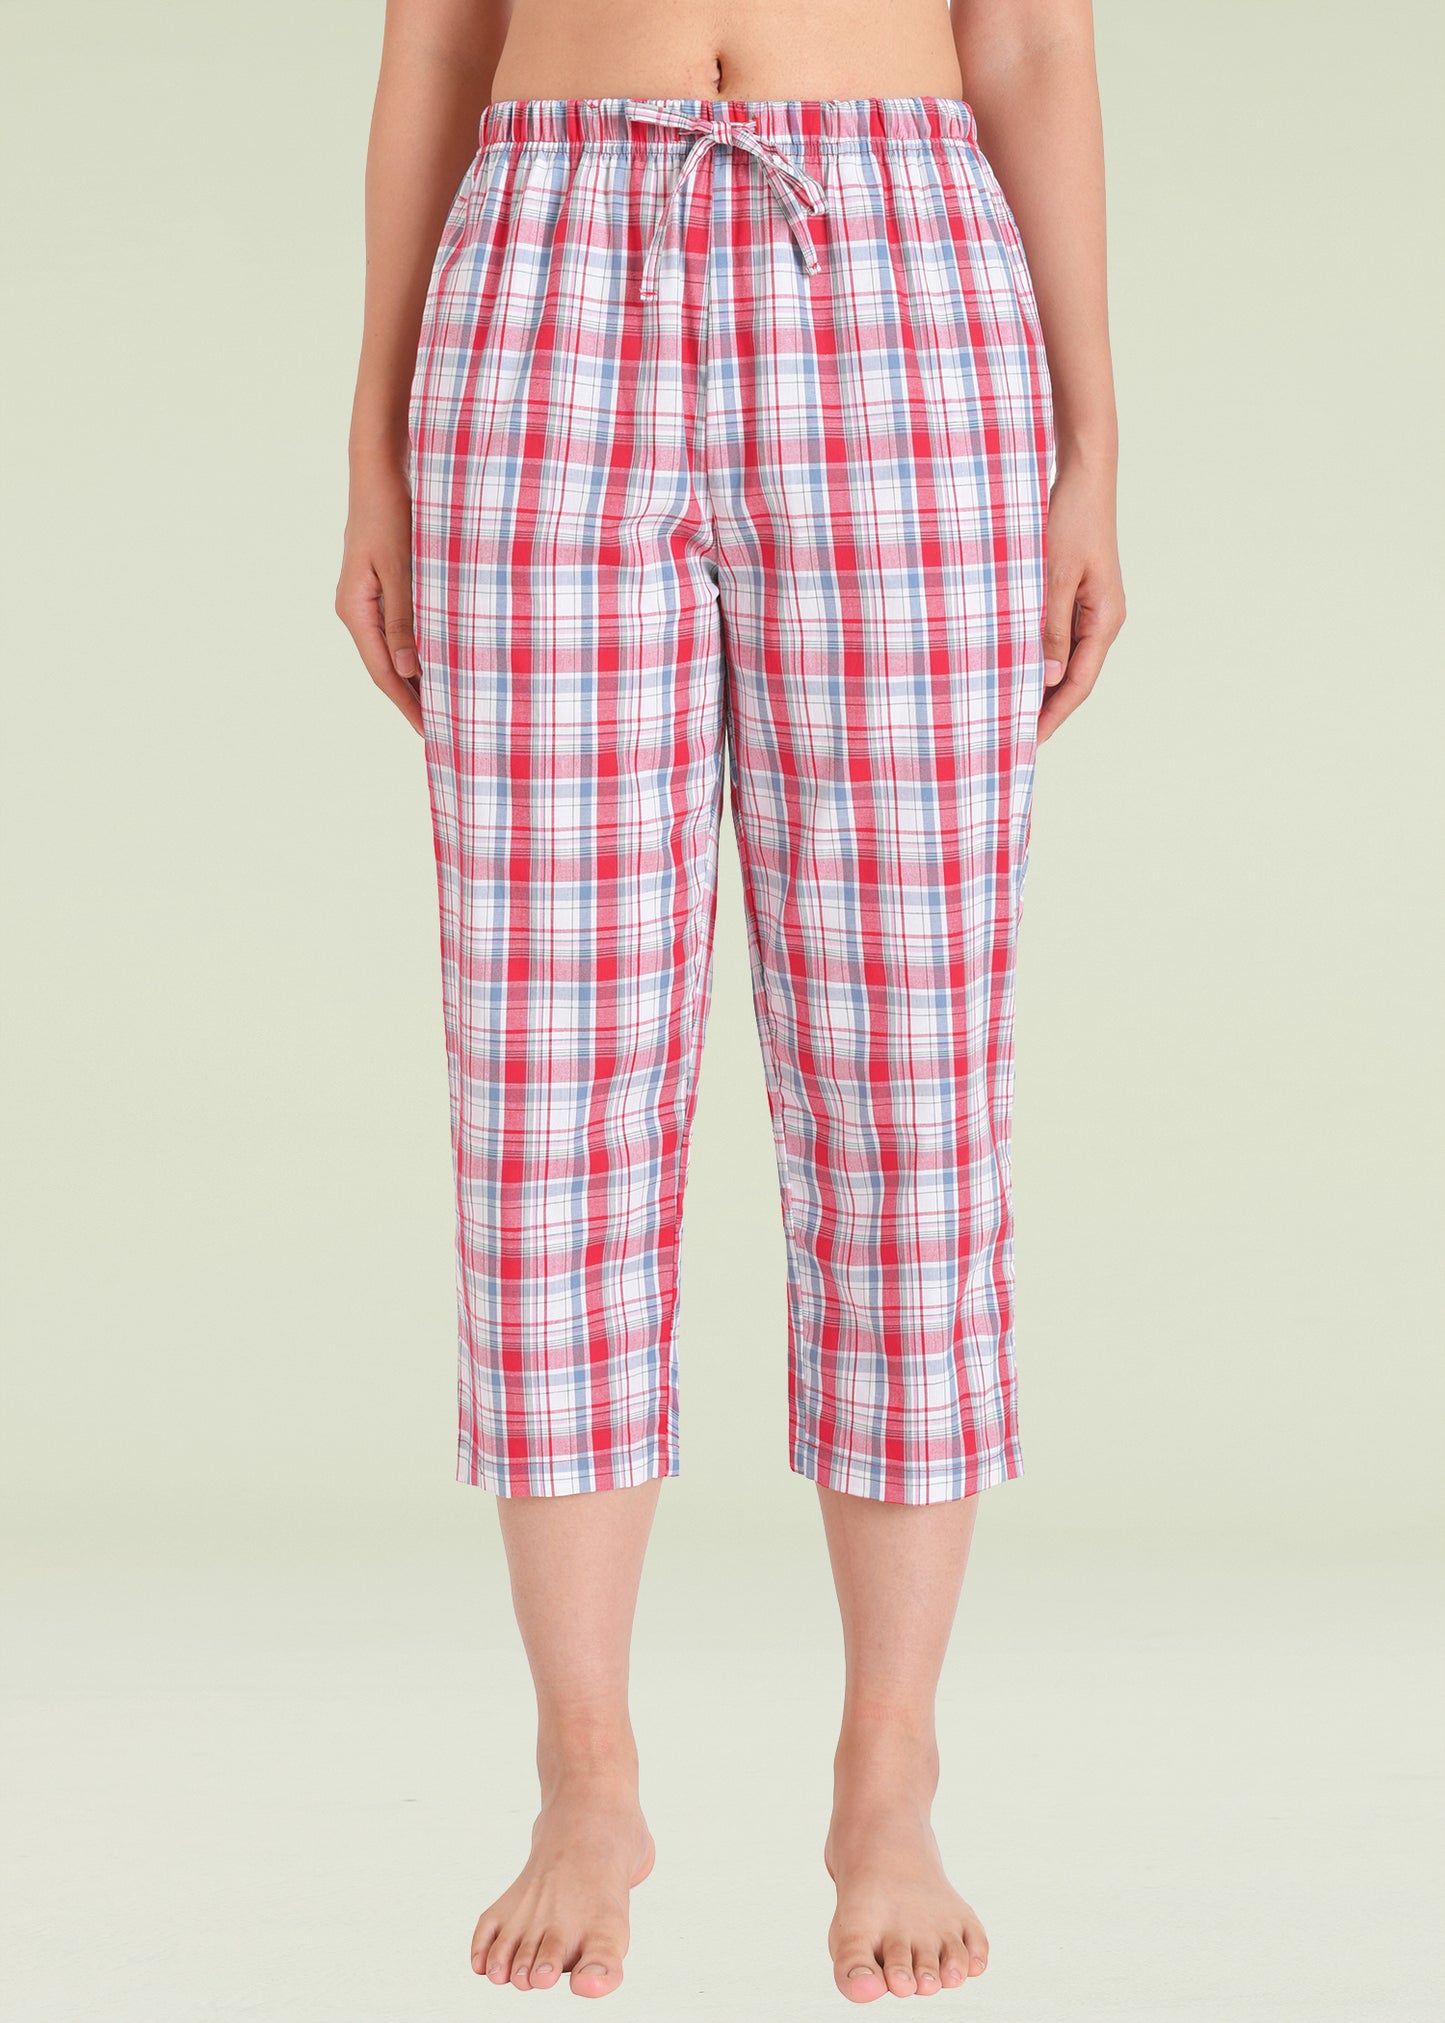 Women's Capri Pajama Pants Cotton PJ Bottoms with Pockets